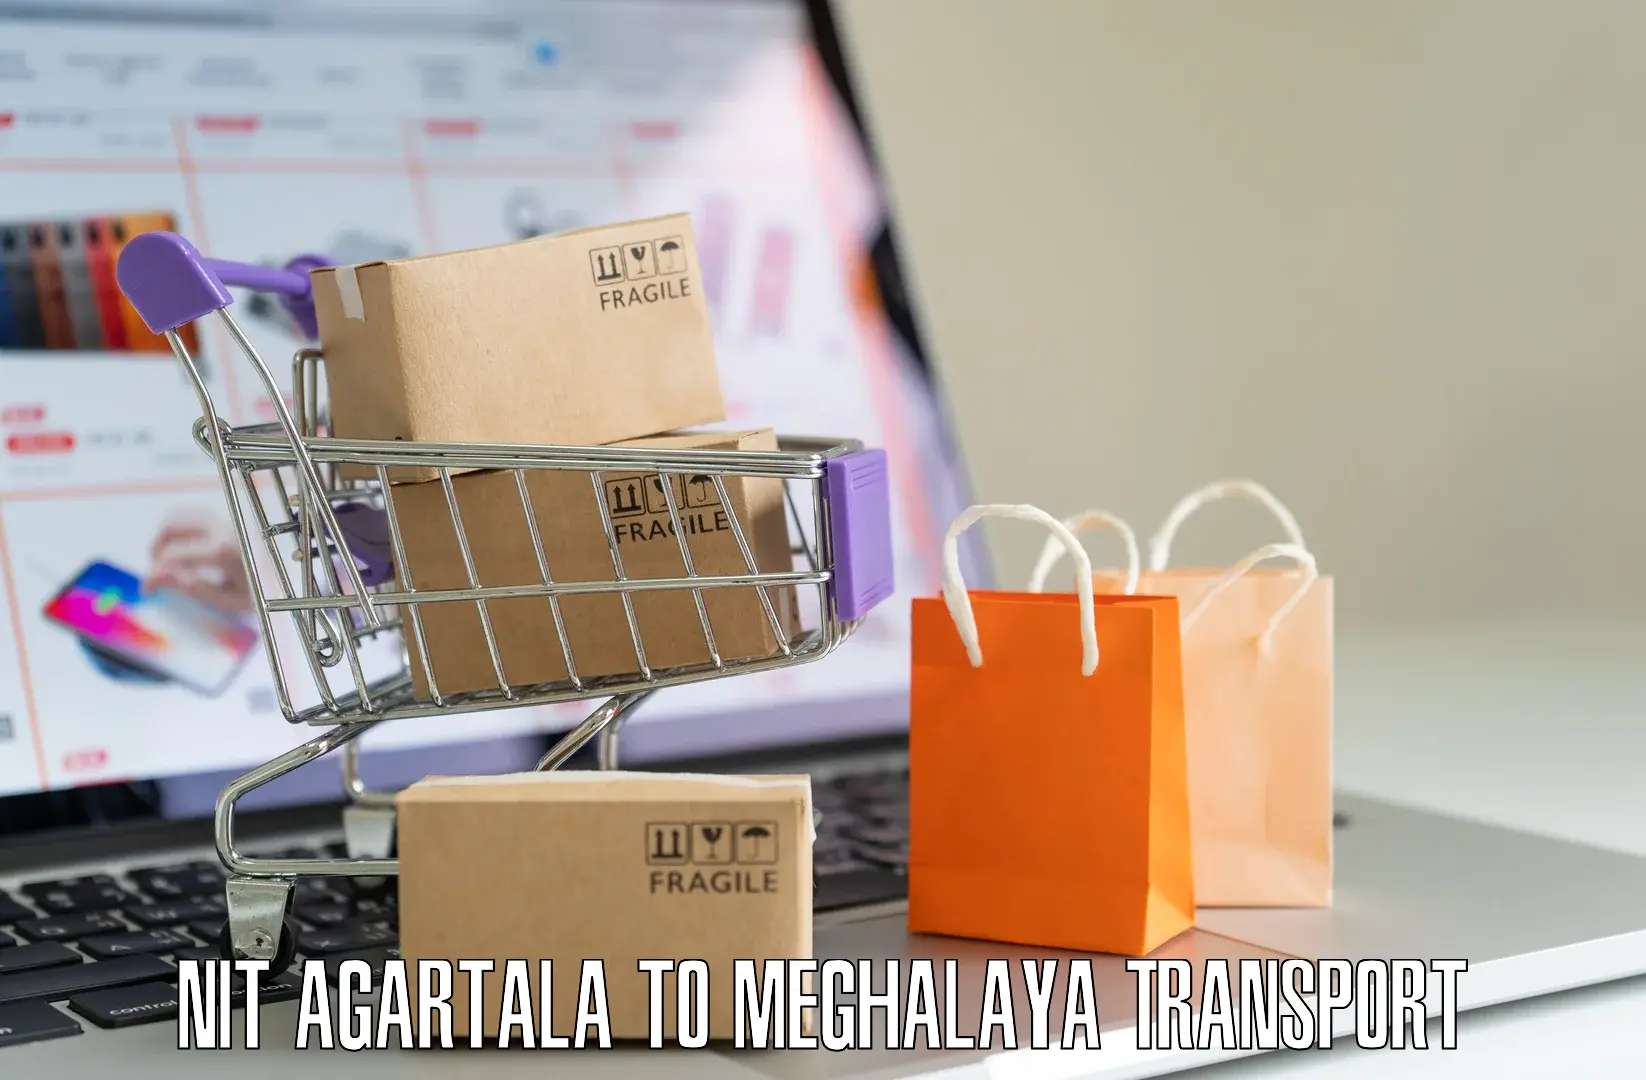 Container transport service NIT Agartala to Meghalaya